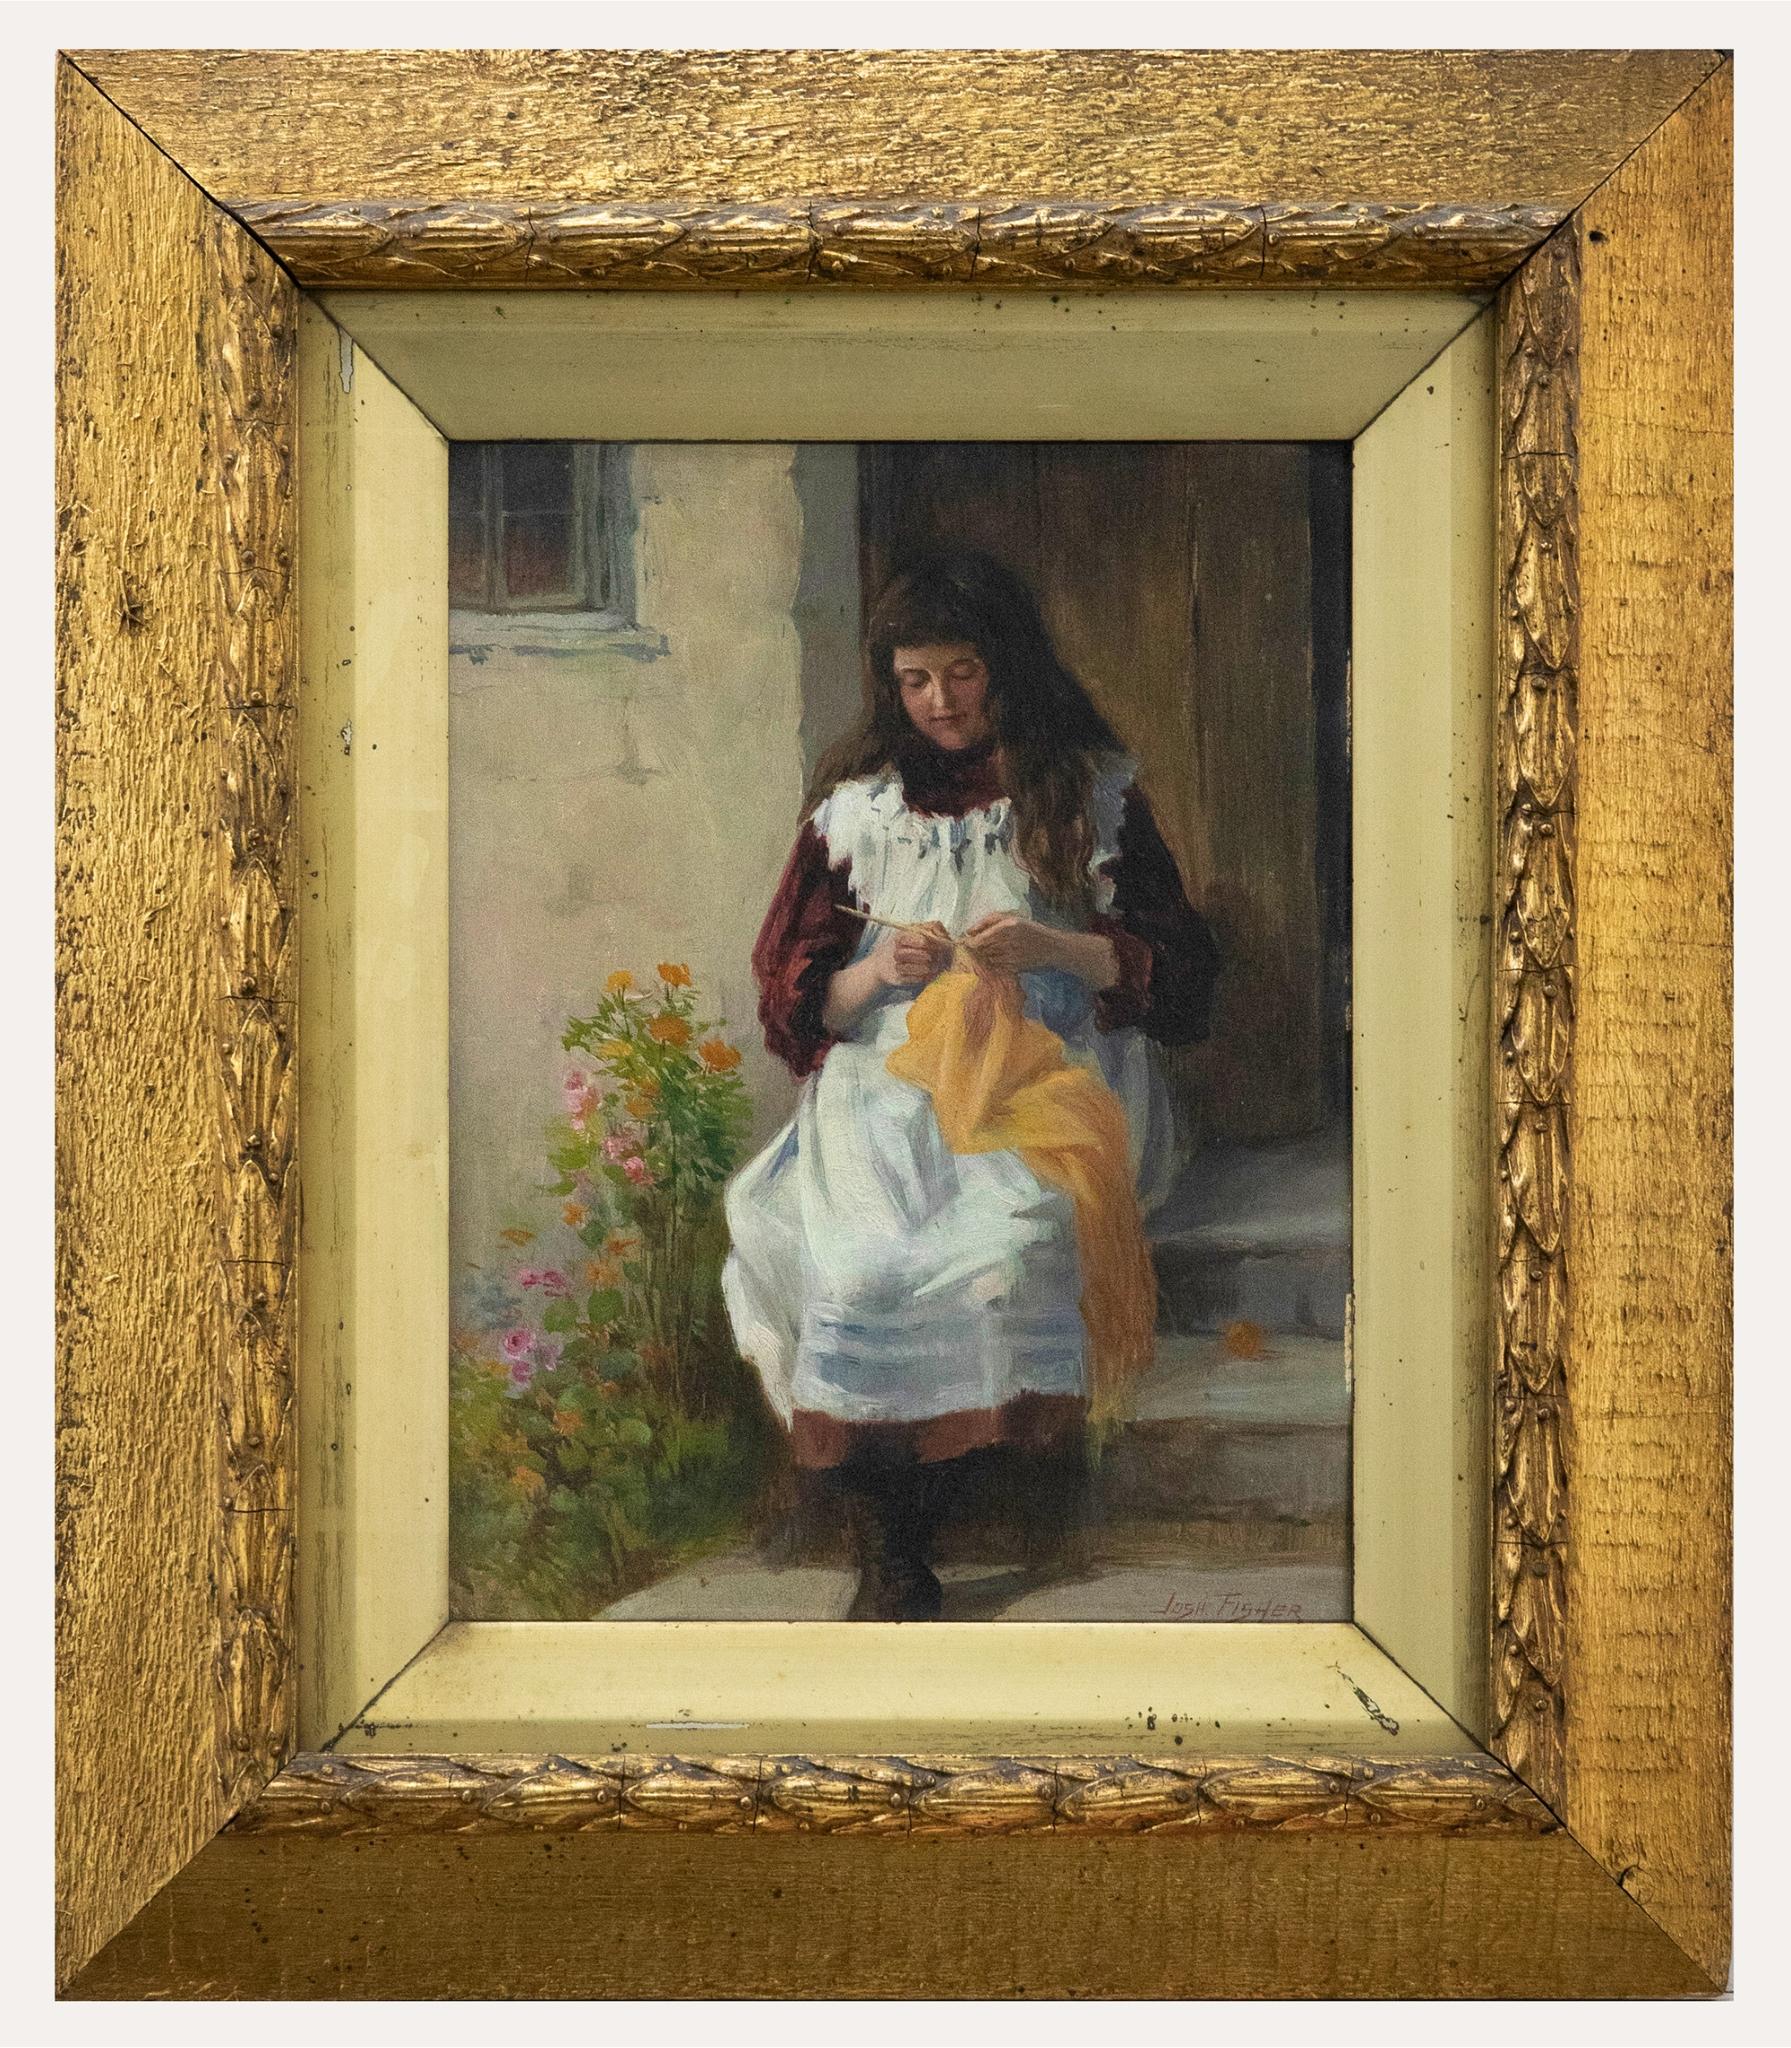 Unknown Portrait Painting - Joshua Fisher (1859-1930) - Late 19th Century Oil, Knitting Grandma's Shawl